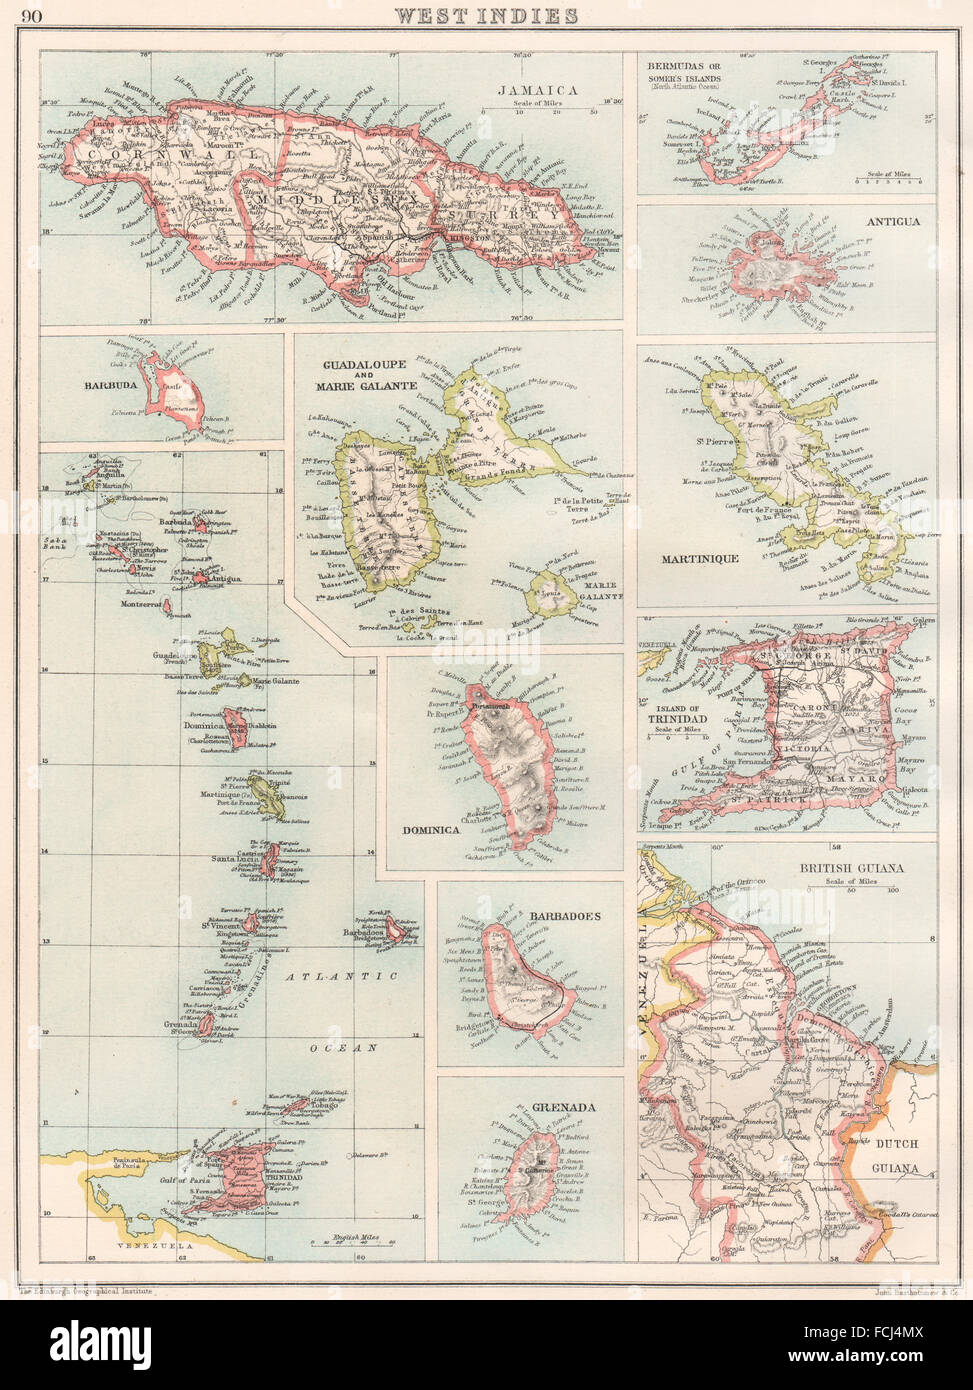 Antilles : Guadeloupe Jamaïque Barbade Bermudes Antigua Martinique &c, 1891 map Banque D'Images